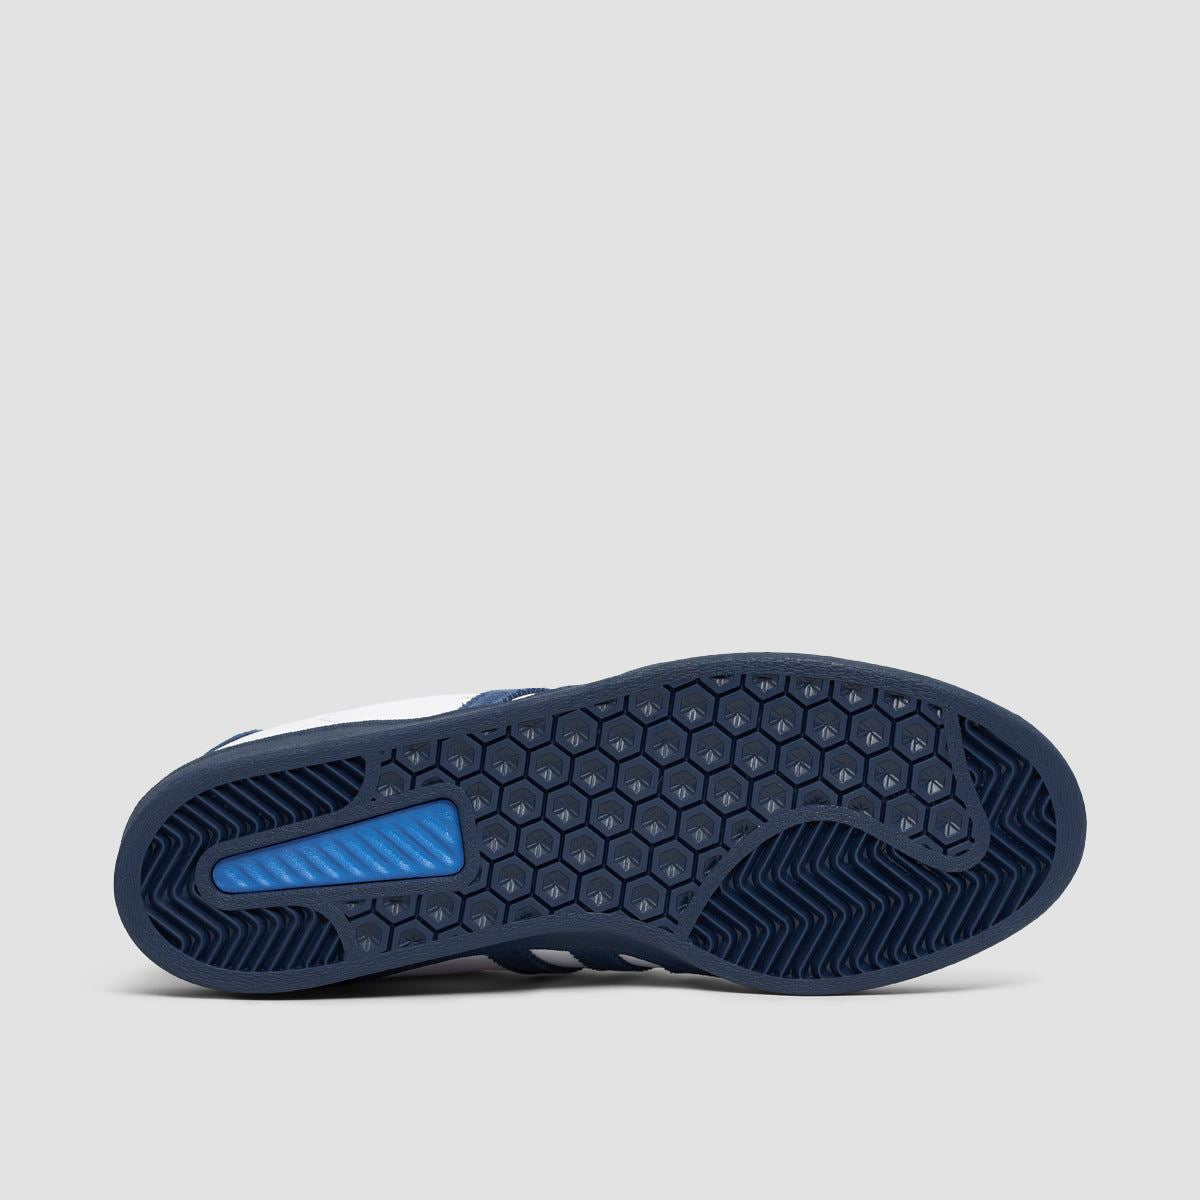 adidas Campus ADV Shoes - Footwear White/Collegiate Navy/Bluebird